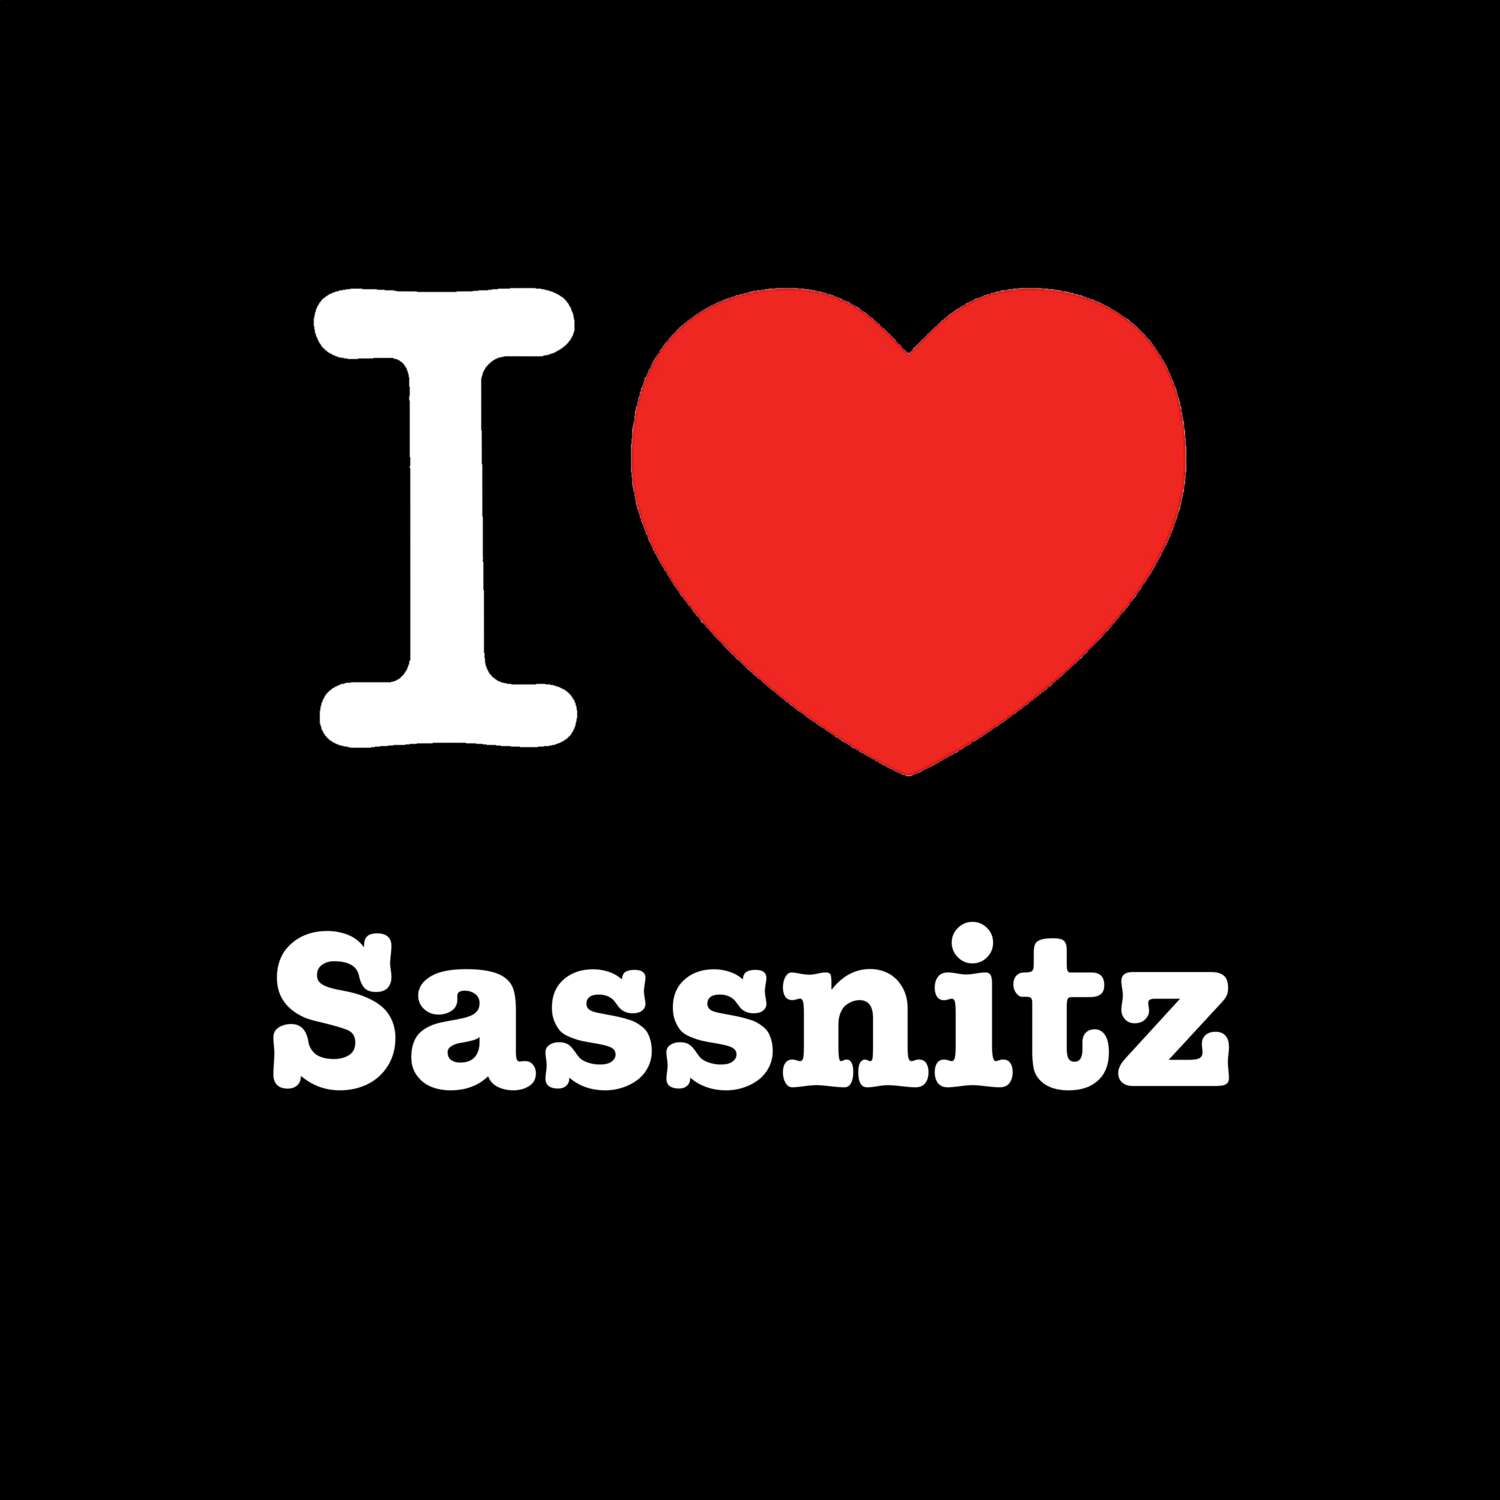 Sassnitz T-Shirt »I love«